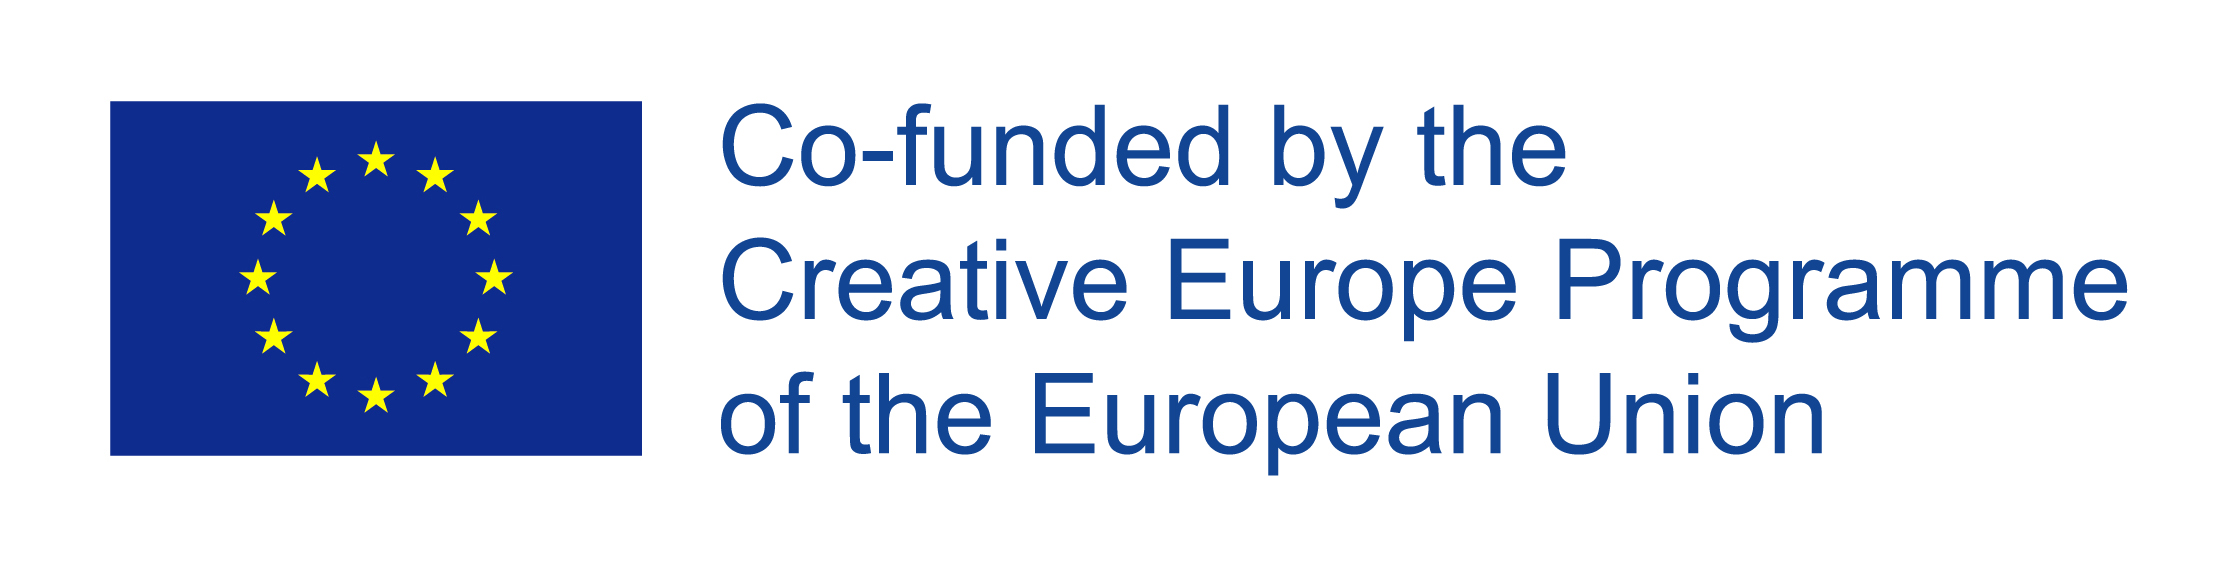 Eu logo Creative Europe